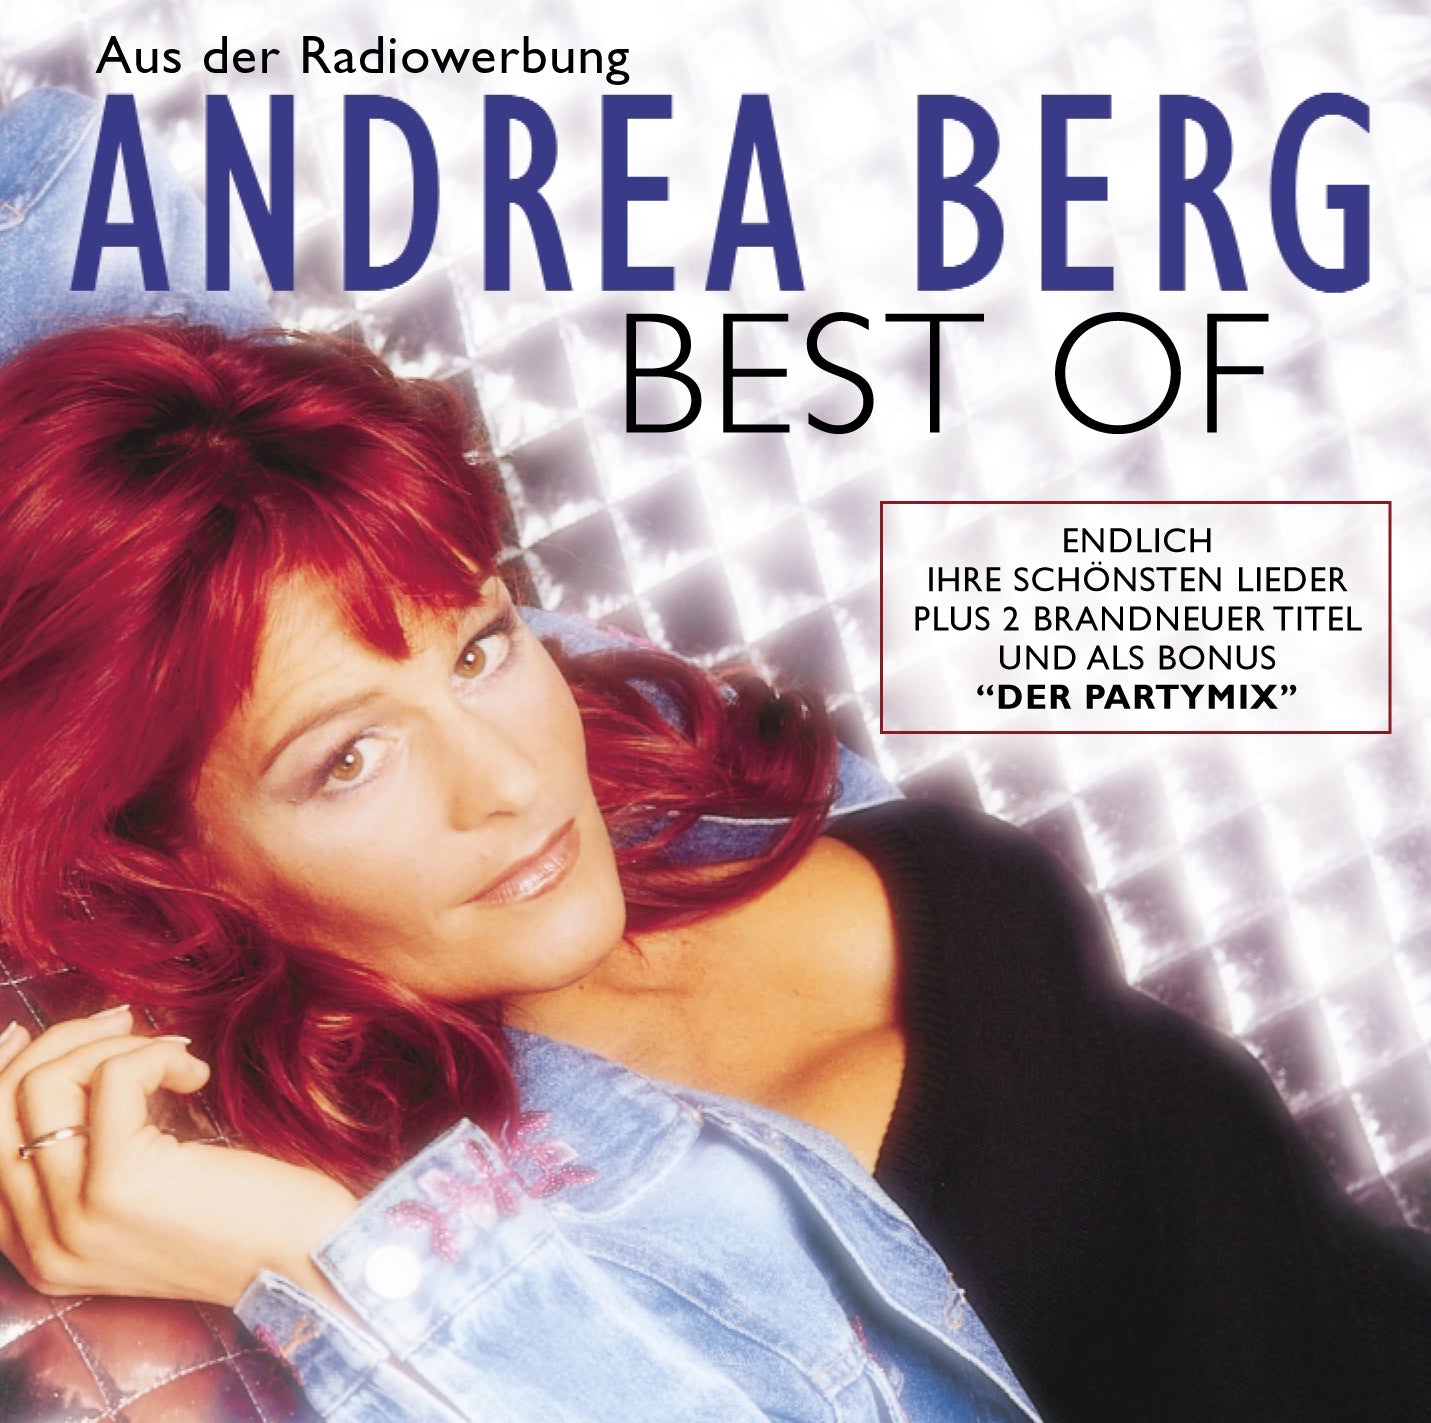 Andrea Berg Best of  (CD)